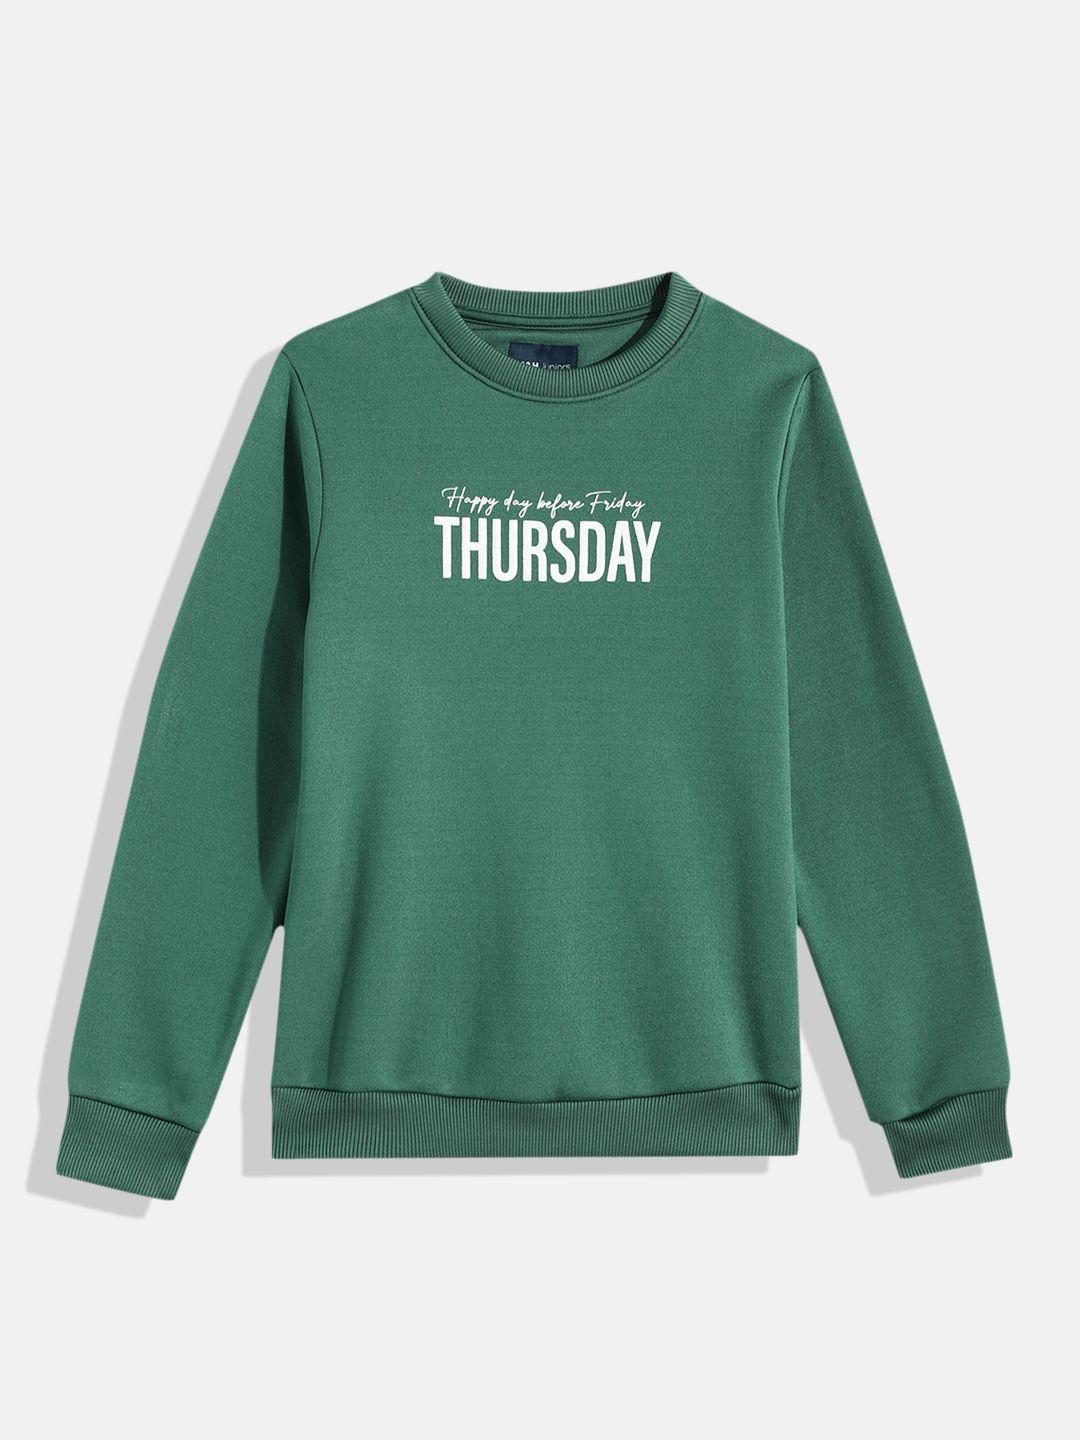 m&h juniors boys green printed sweatshirt